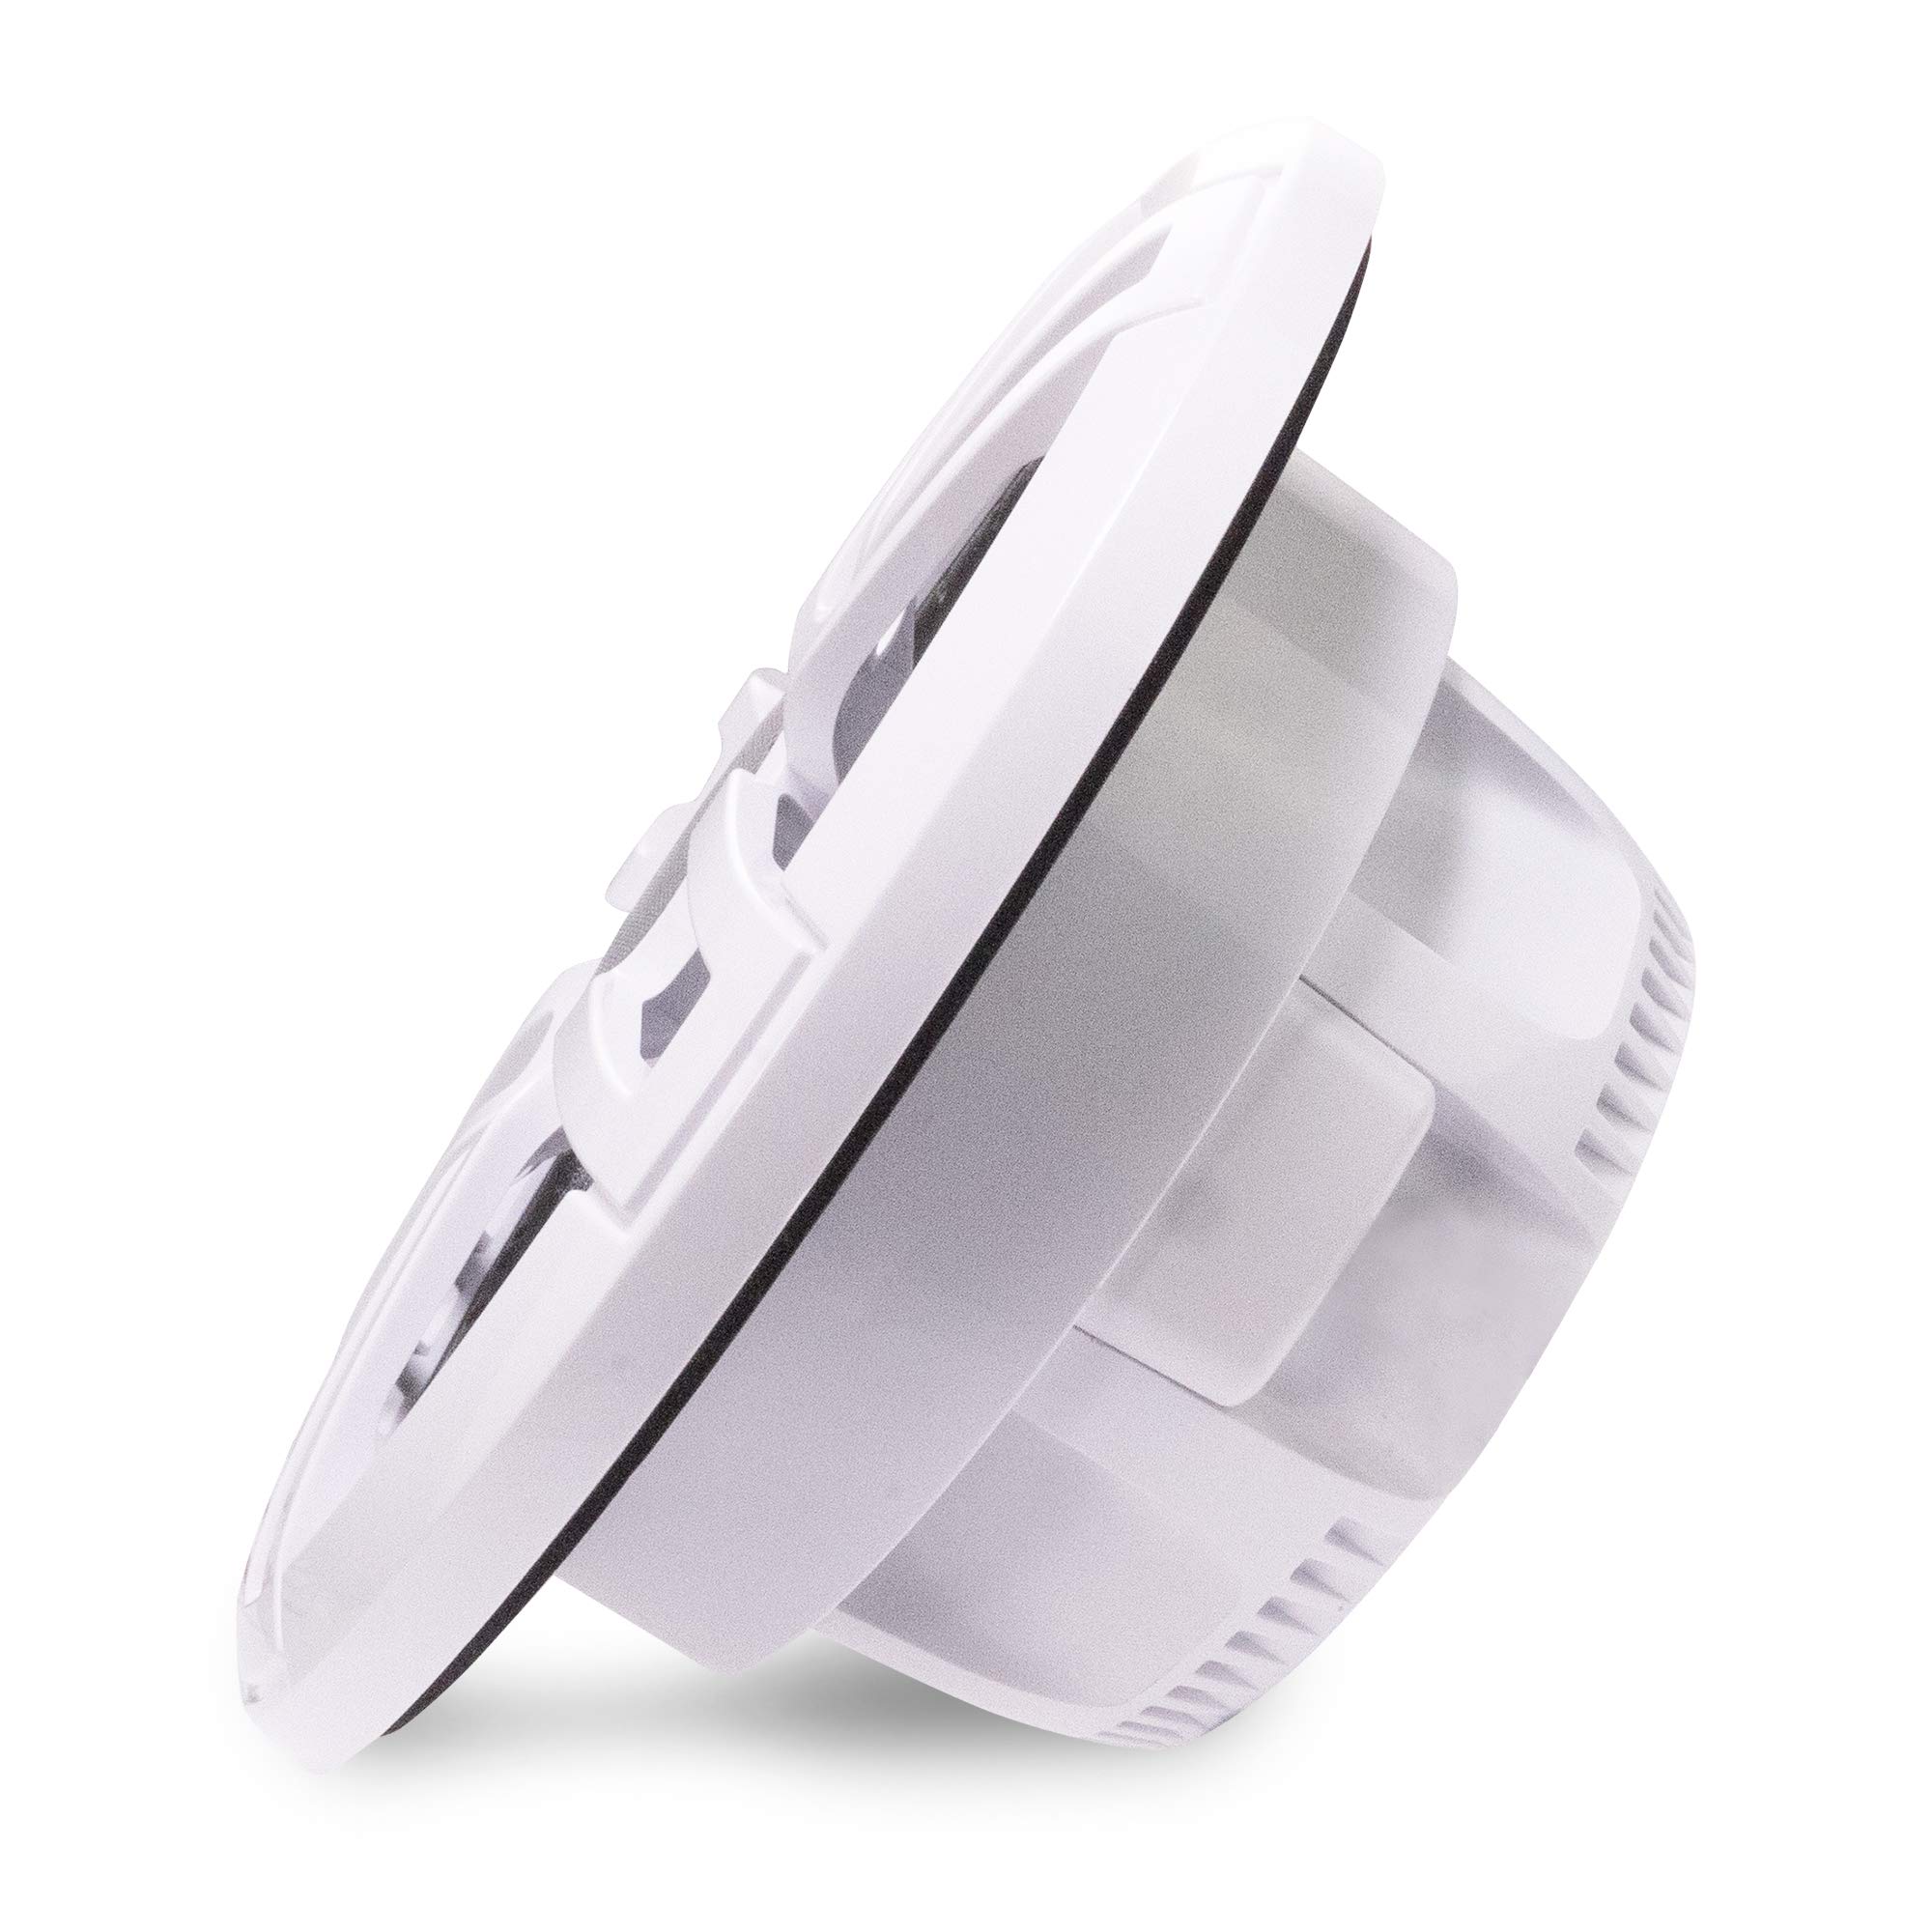 Garmin Fusion® XS Series Marine Speakers, 7.7